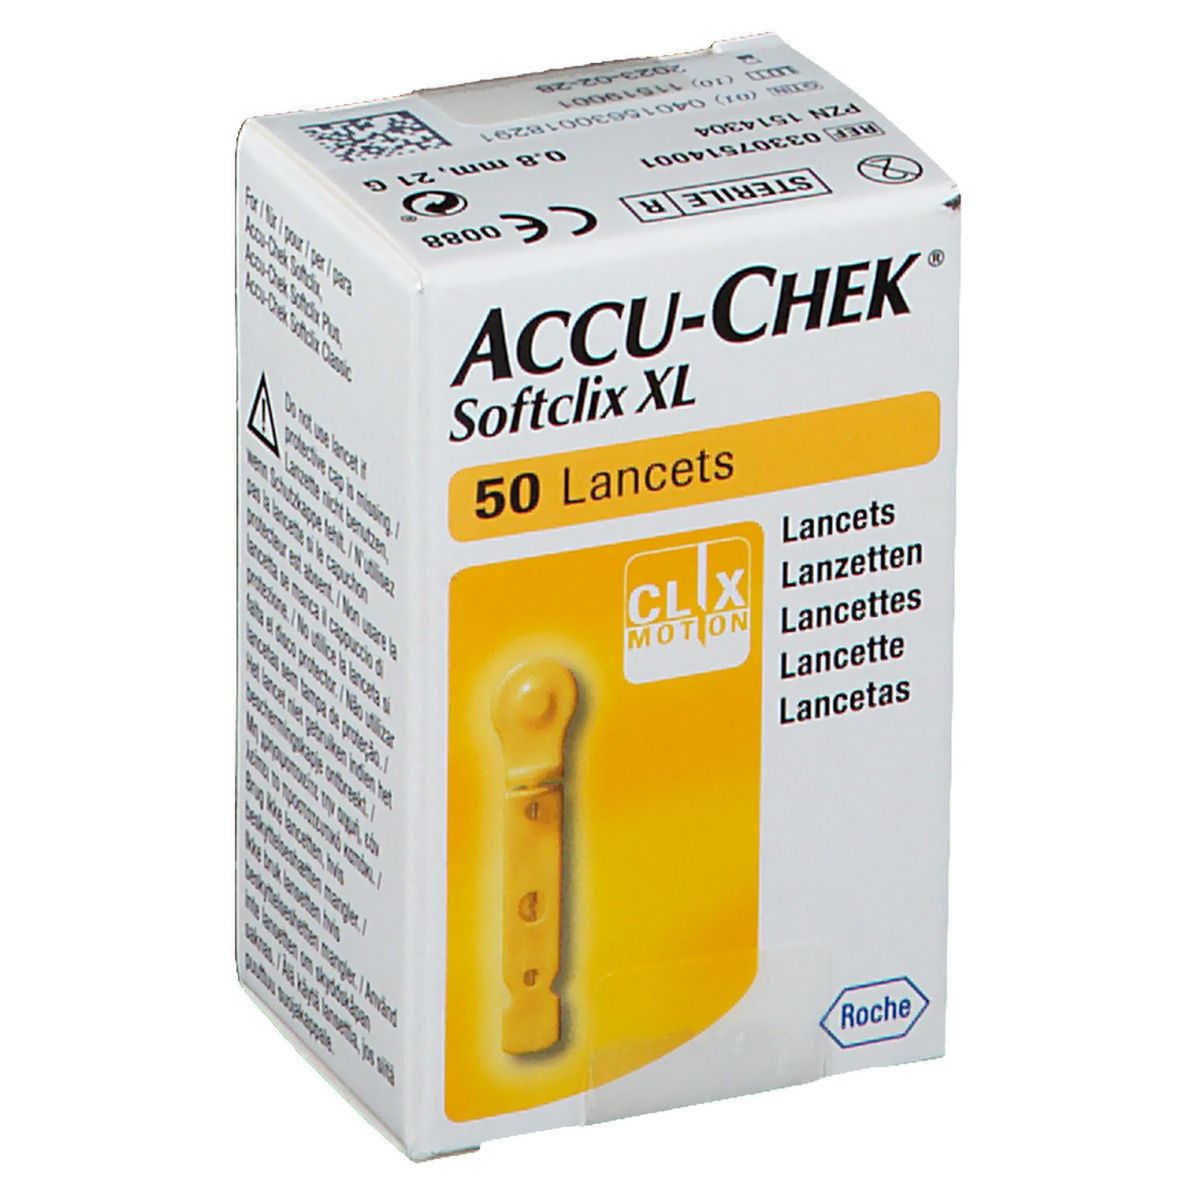 ACCU-CHEK® Softclix Lancet Xl